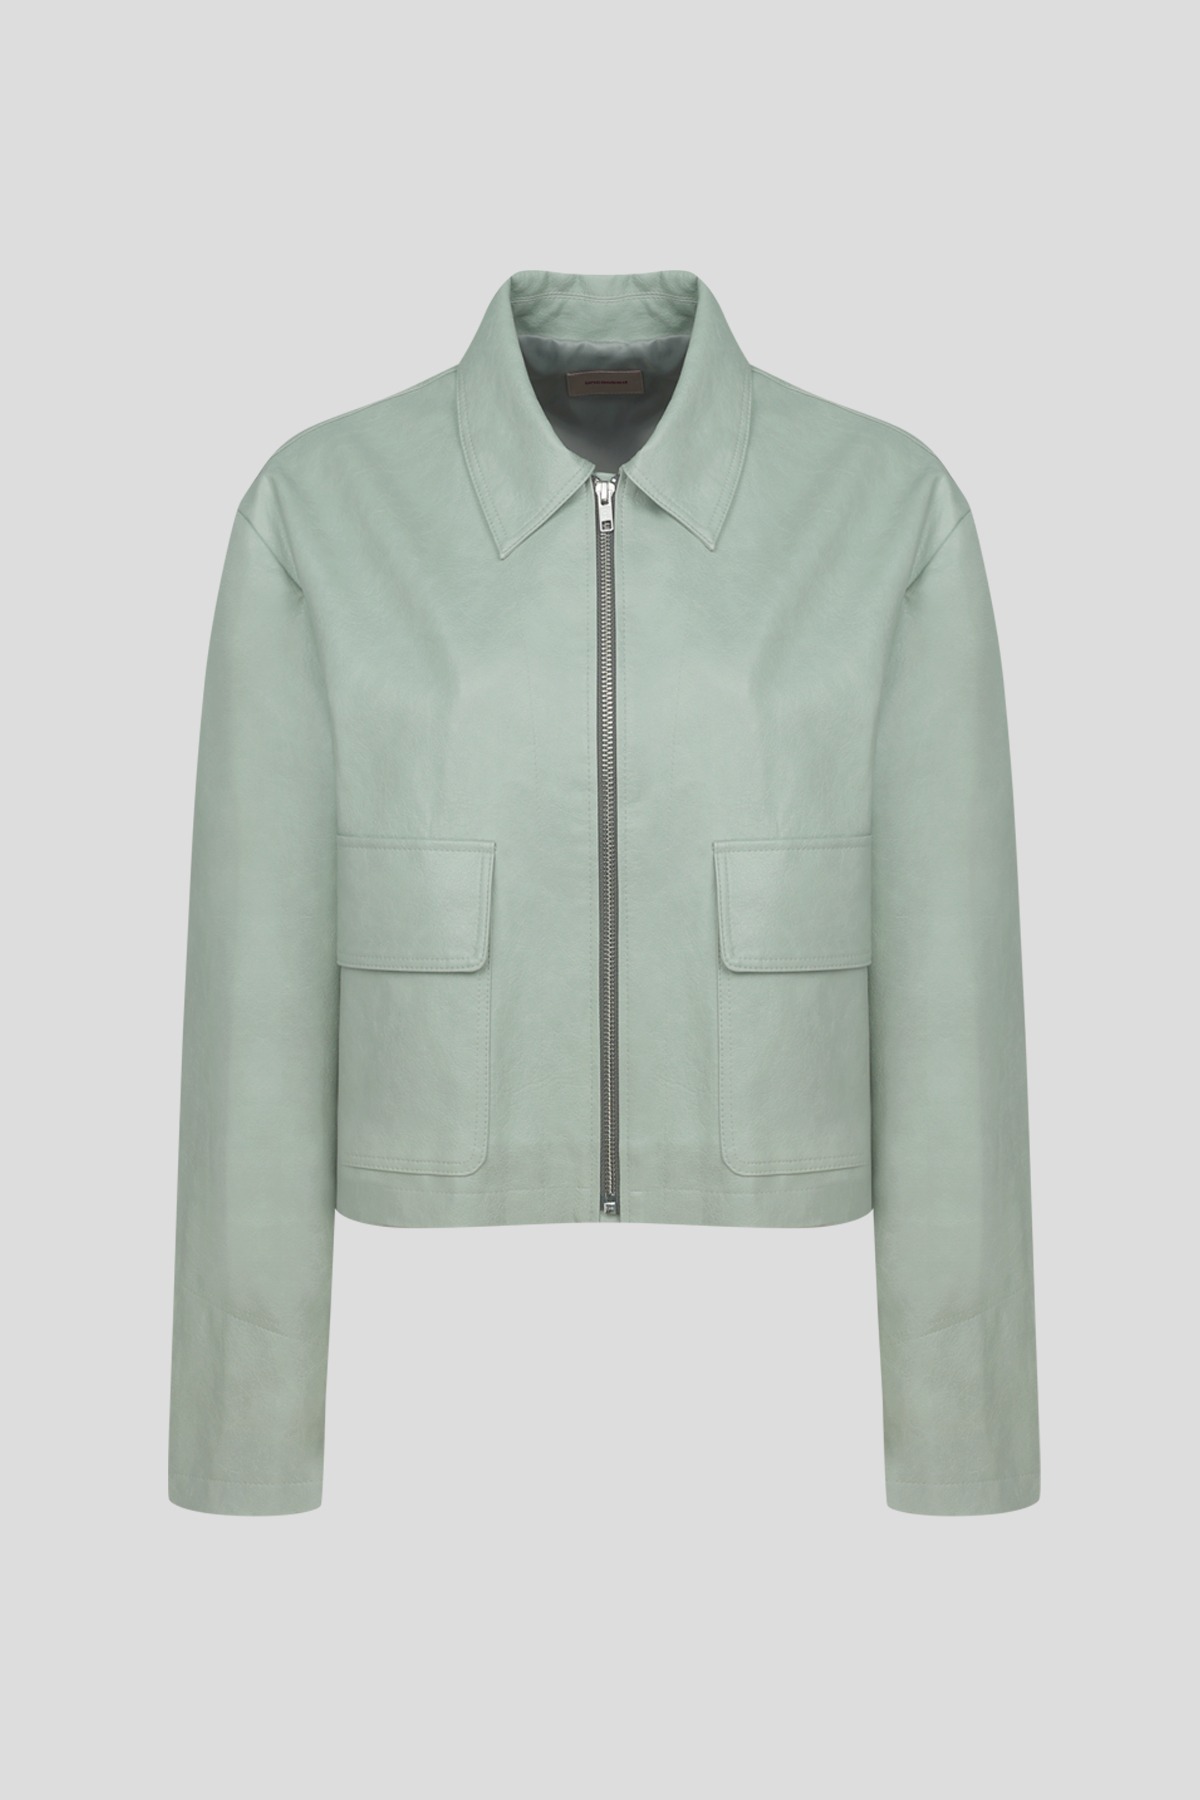 Two pocket faux leather short jacket (mint)